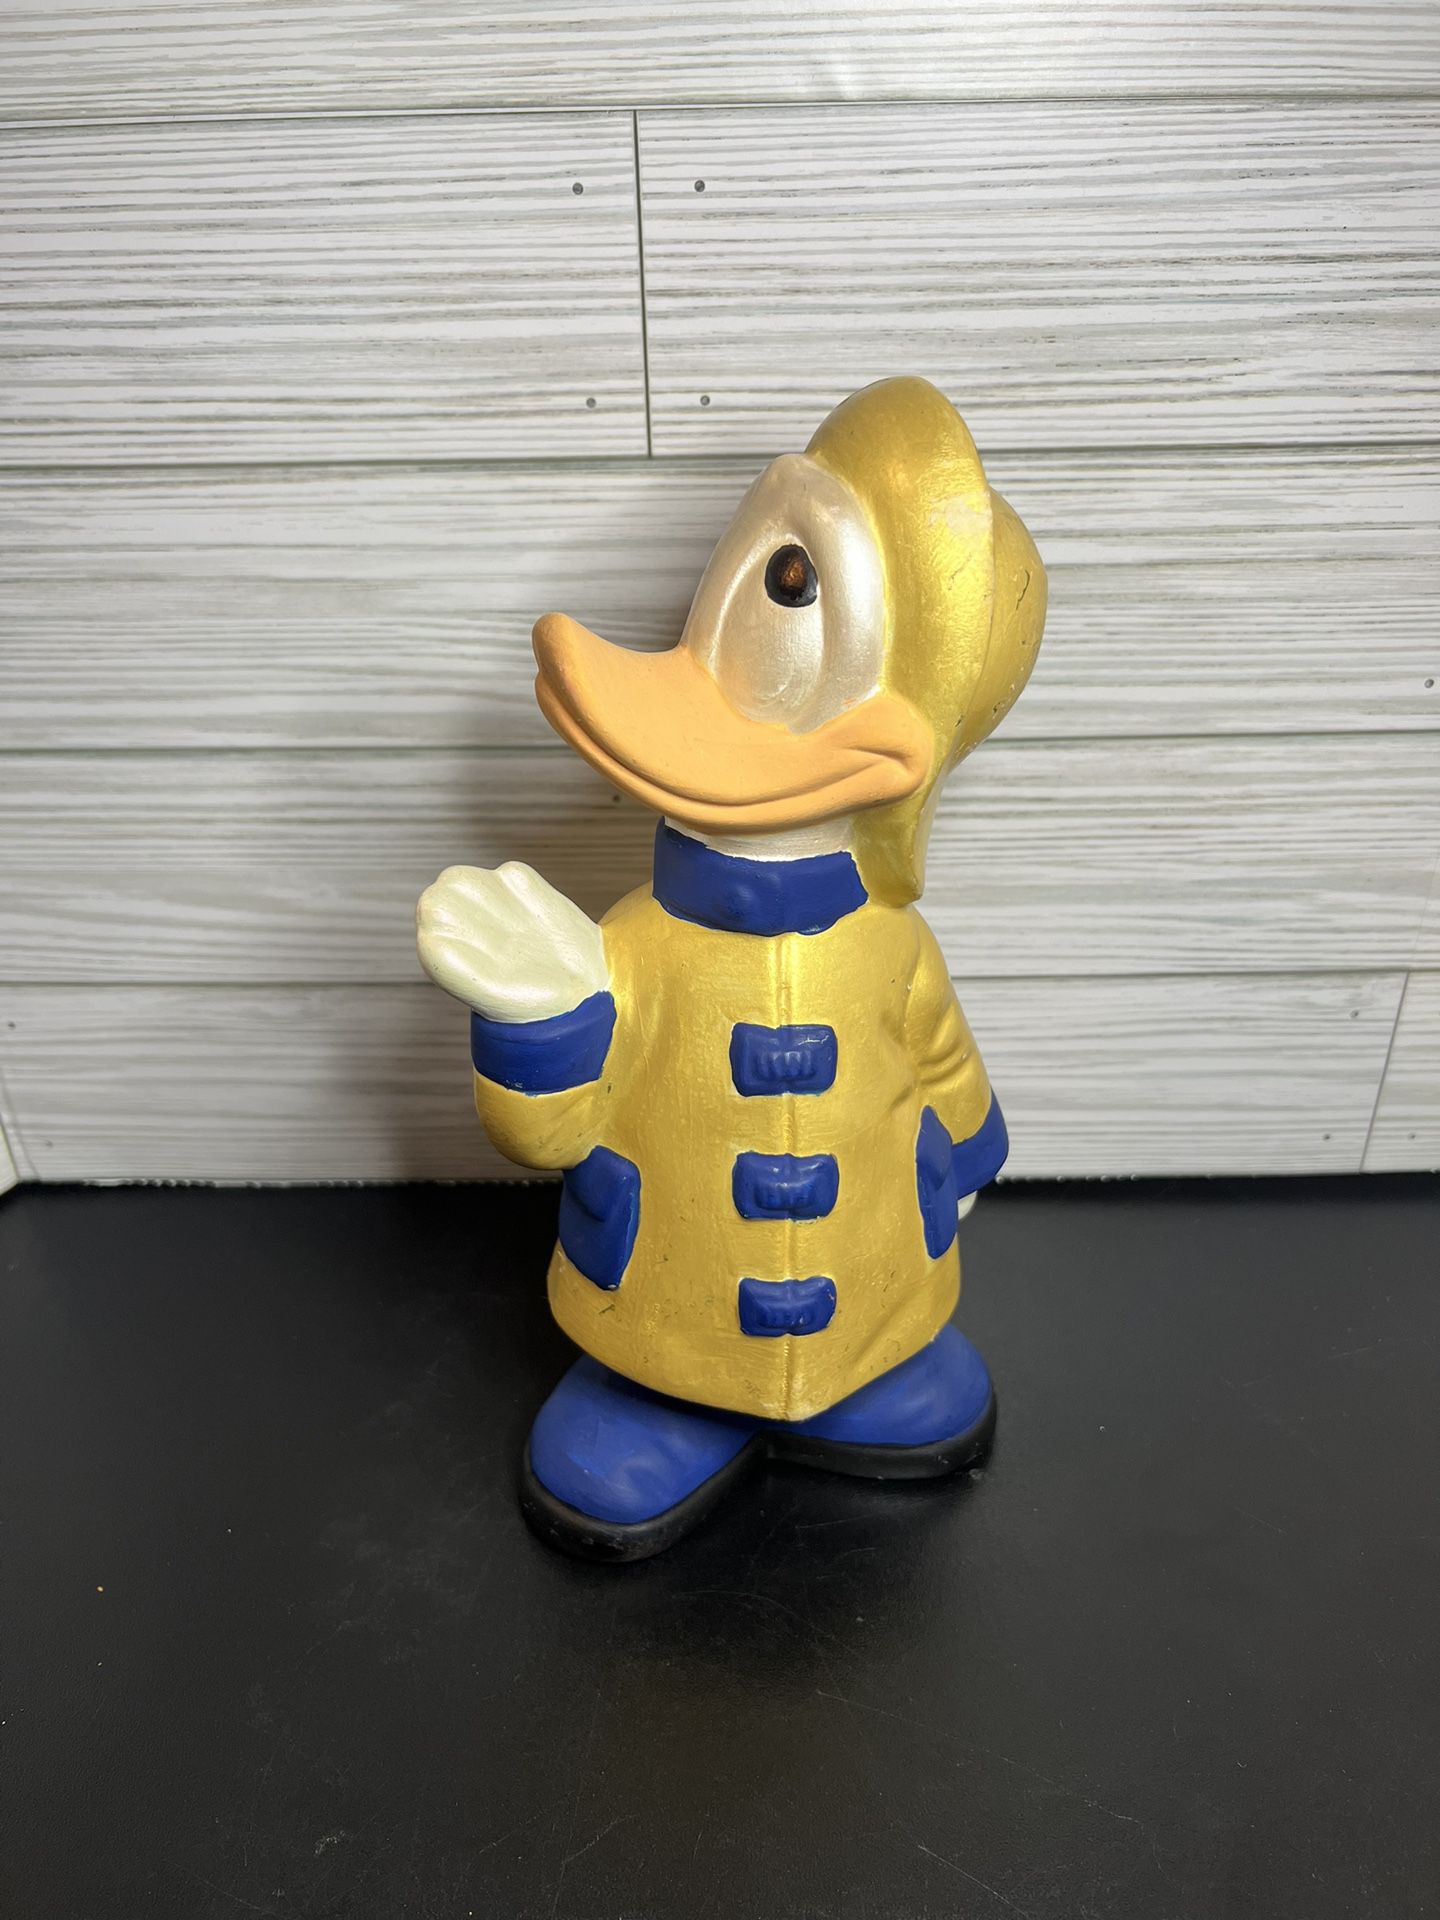 Vintage 1980s 9.5" Donald Duck Ceramic Figurine w/ Hand Painted Yellow Rain Coat